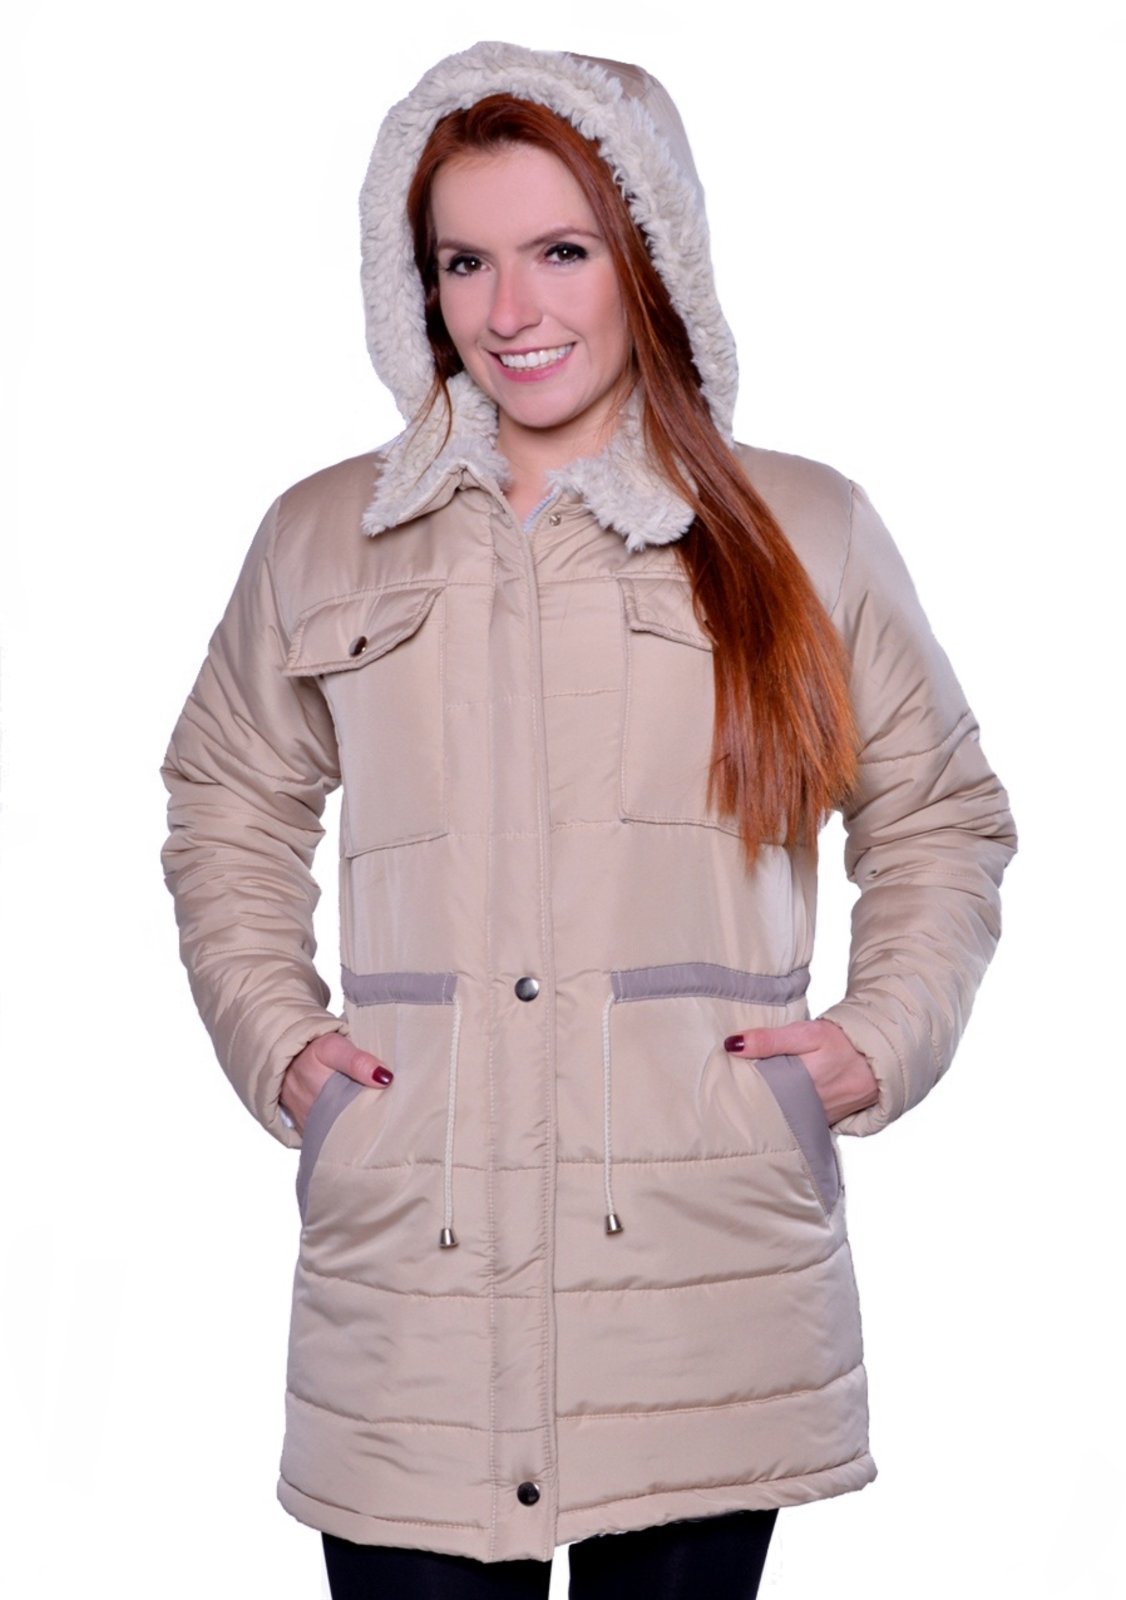 jaqueta de frio branca feminina